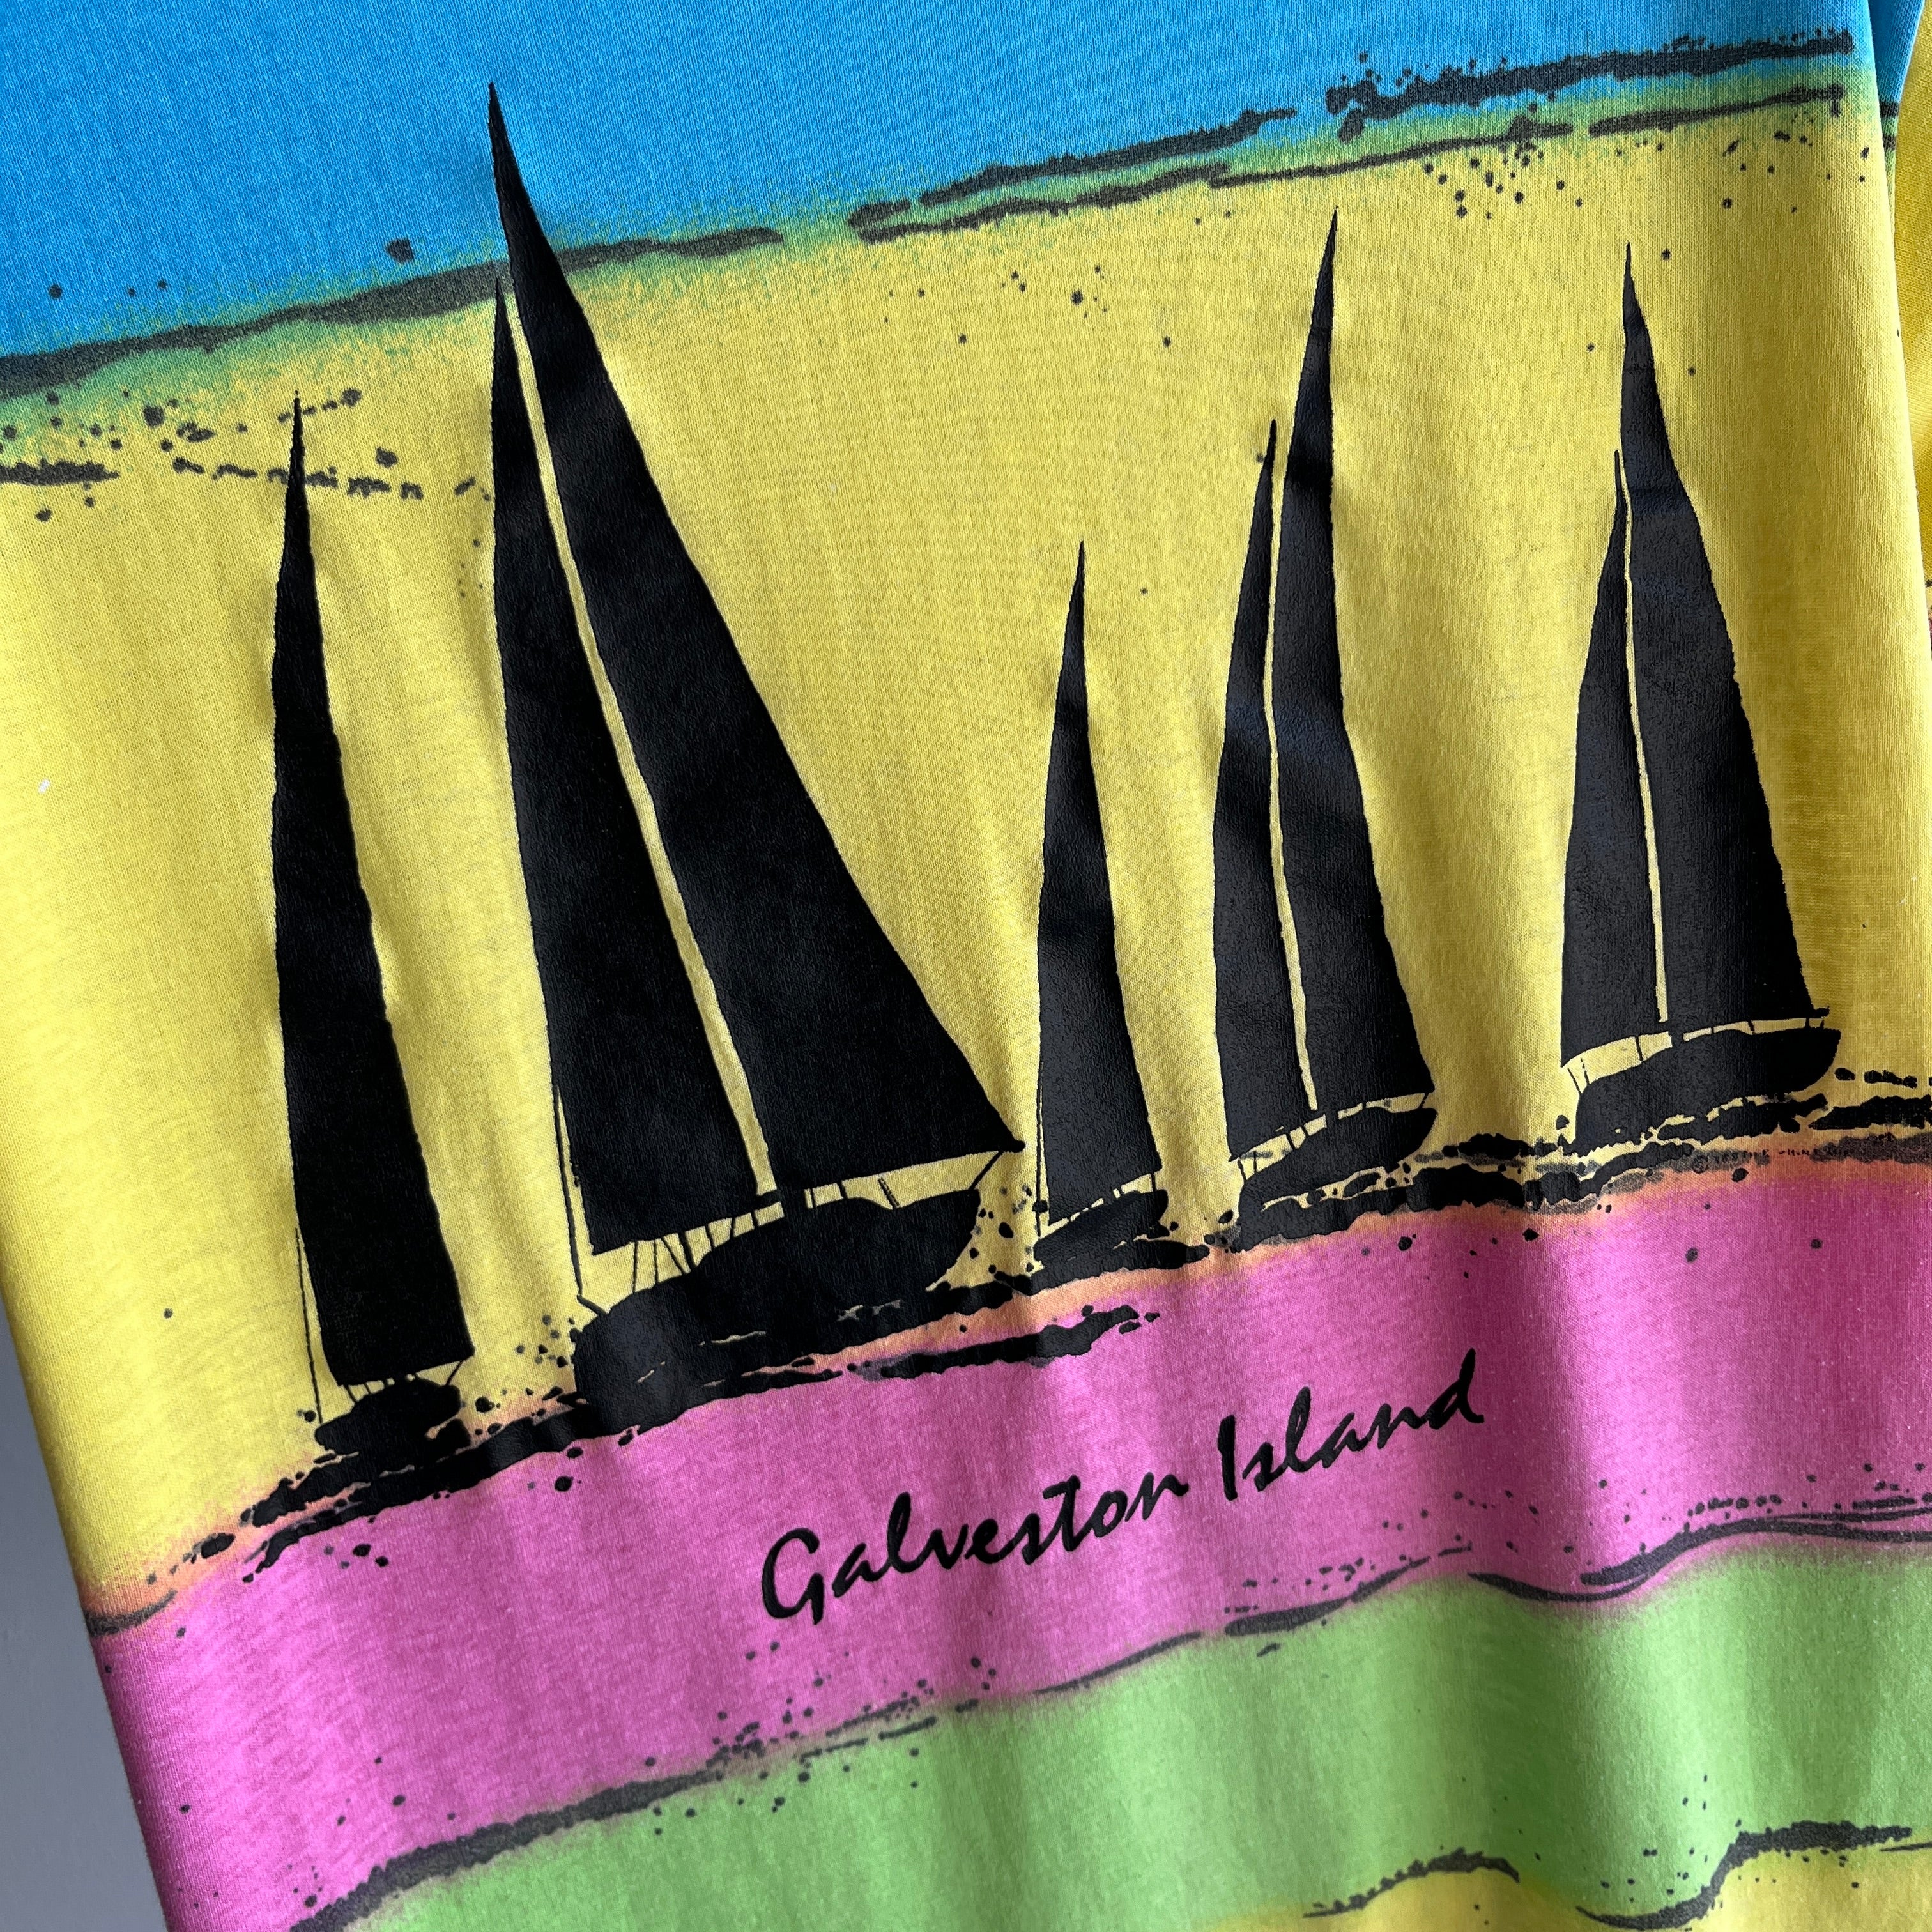 1980s Galveston Island Fantastic Tourist T-Shirt